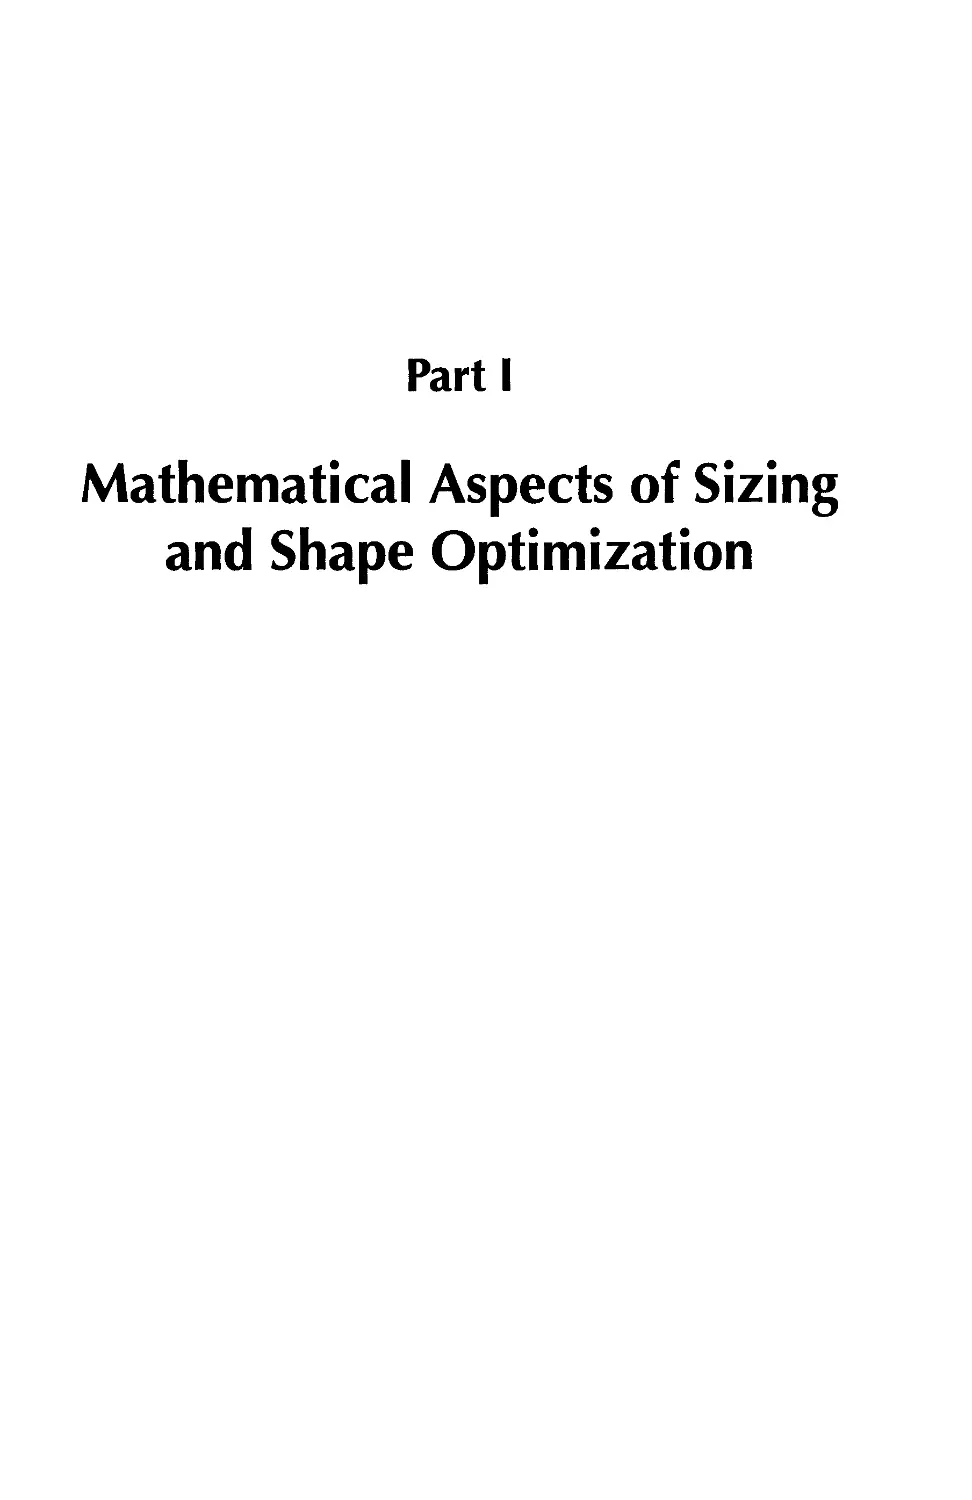 Part I Mathematical Aspects of Sizing and Shape Optimization